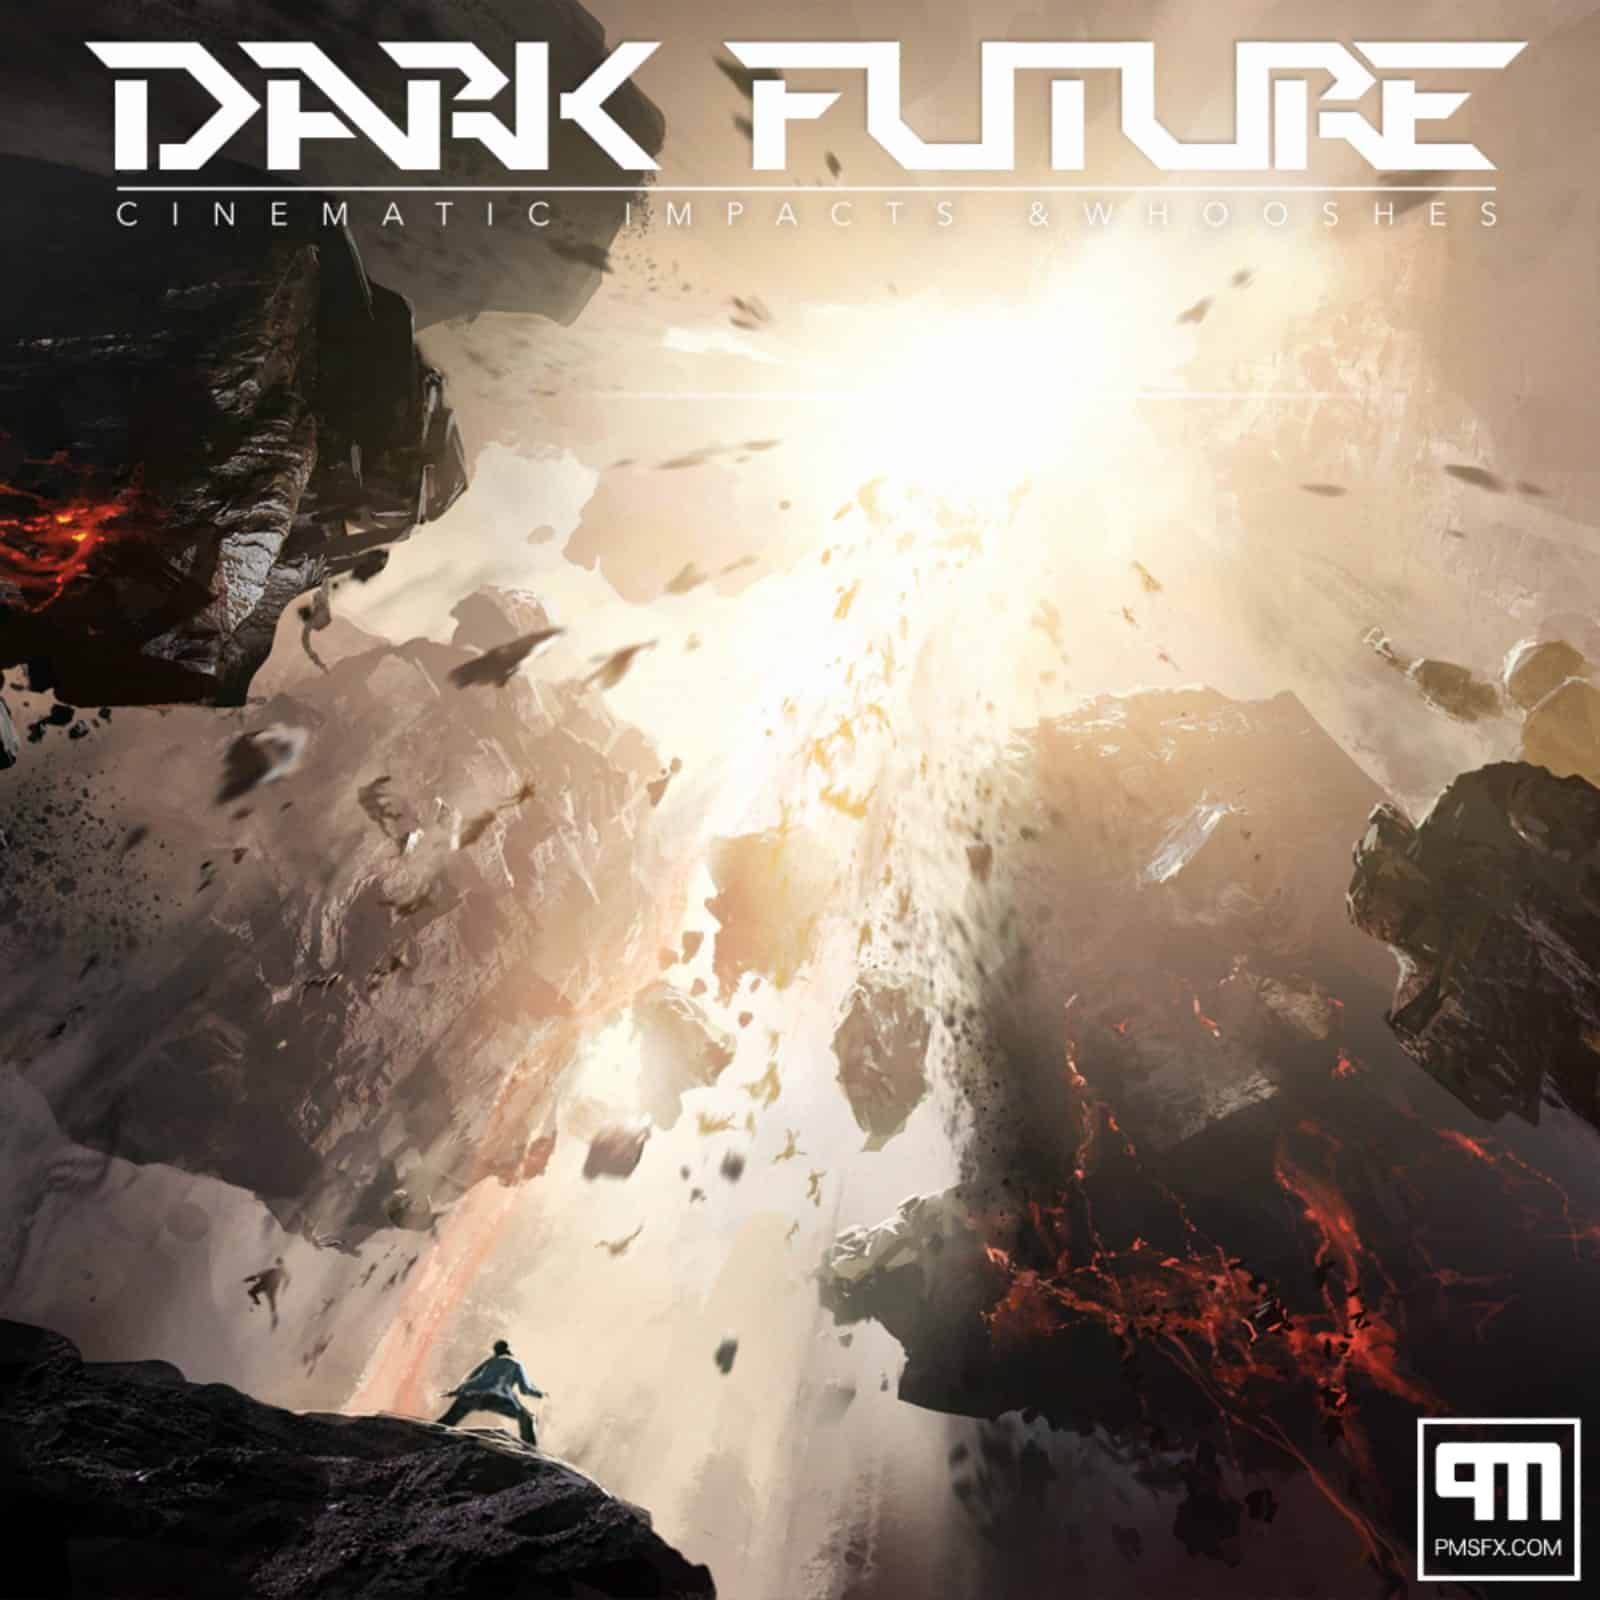 PMSFX Releases Dark Future a Collection of Dark, Futuristic Sound Effects